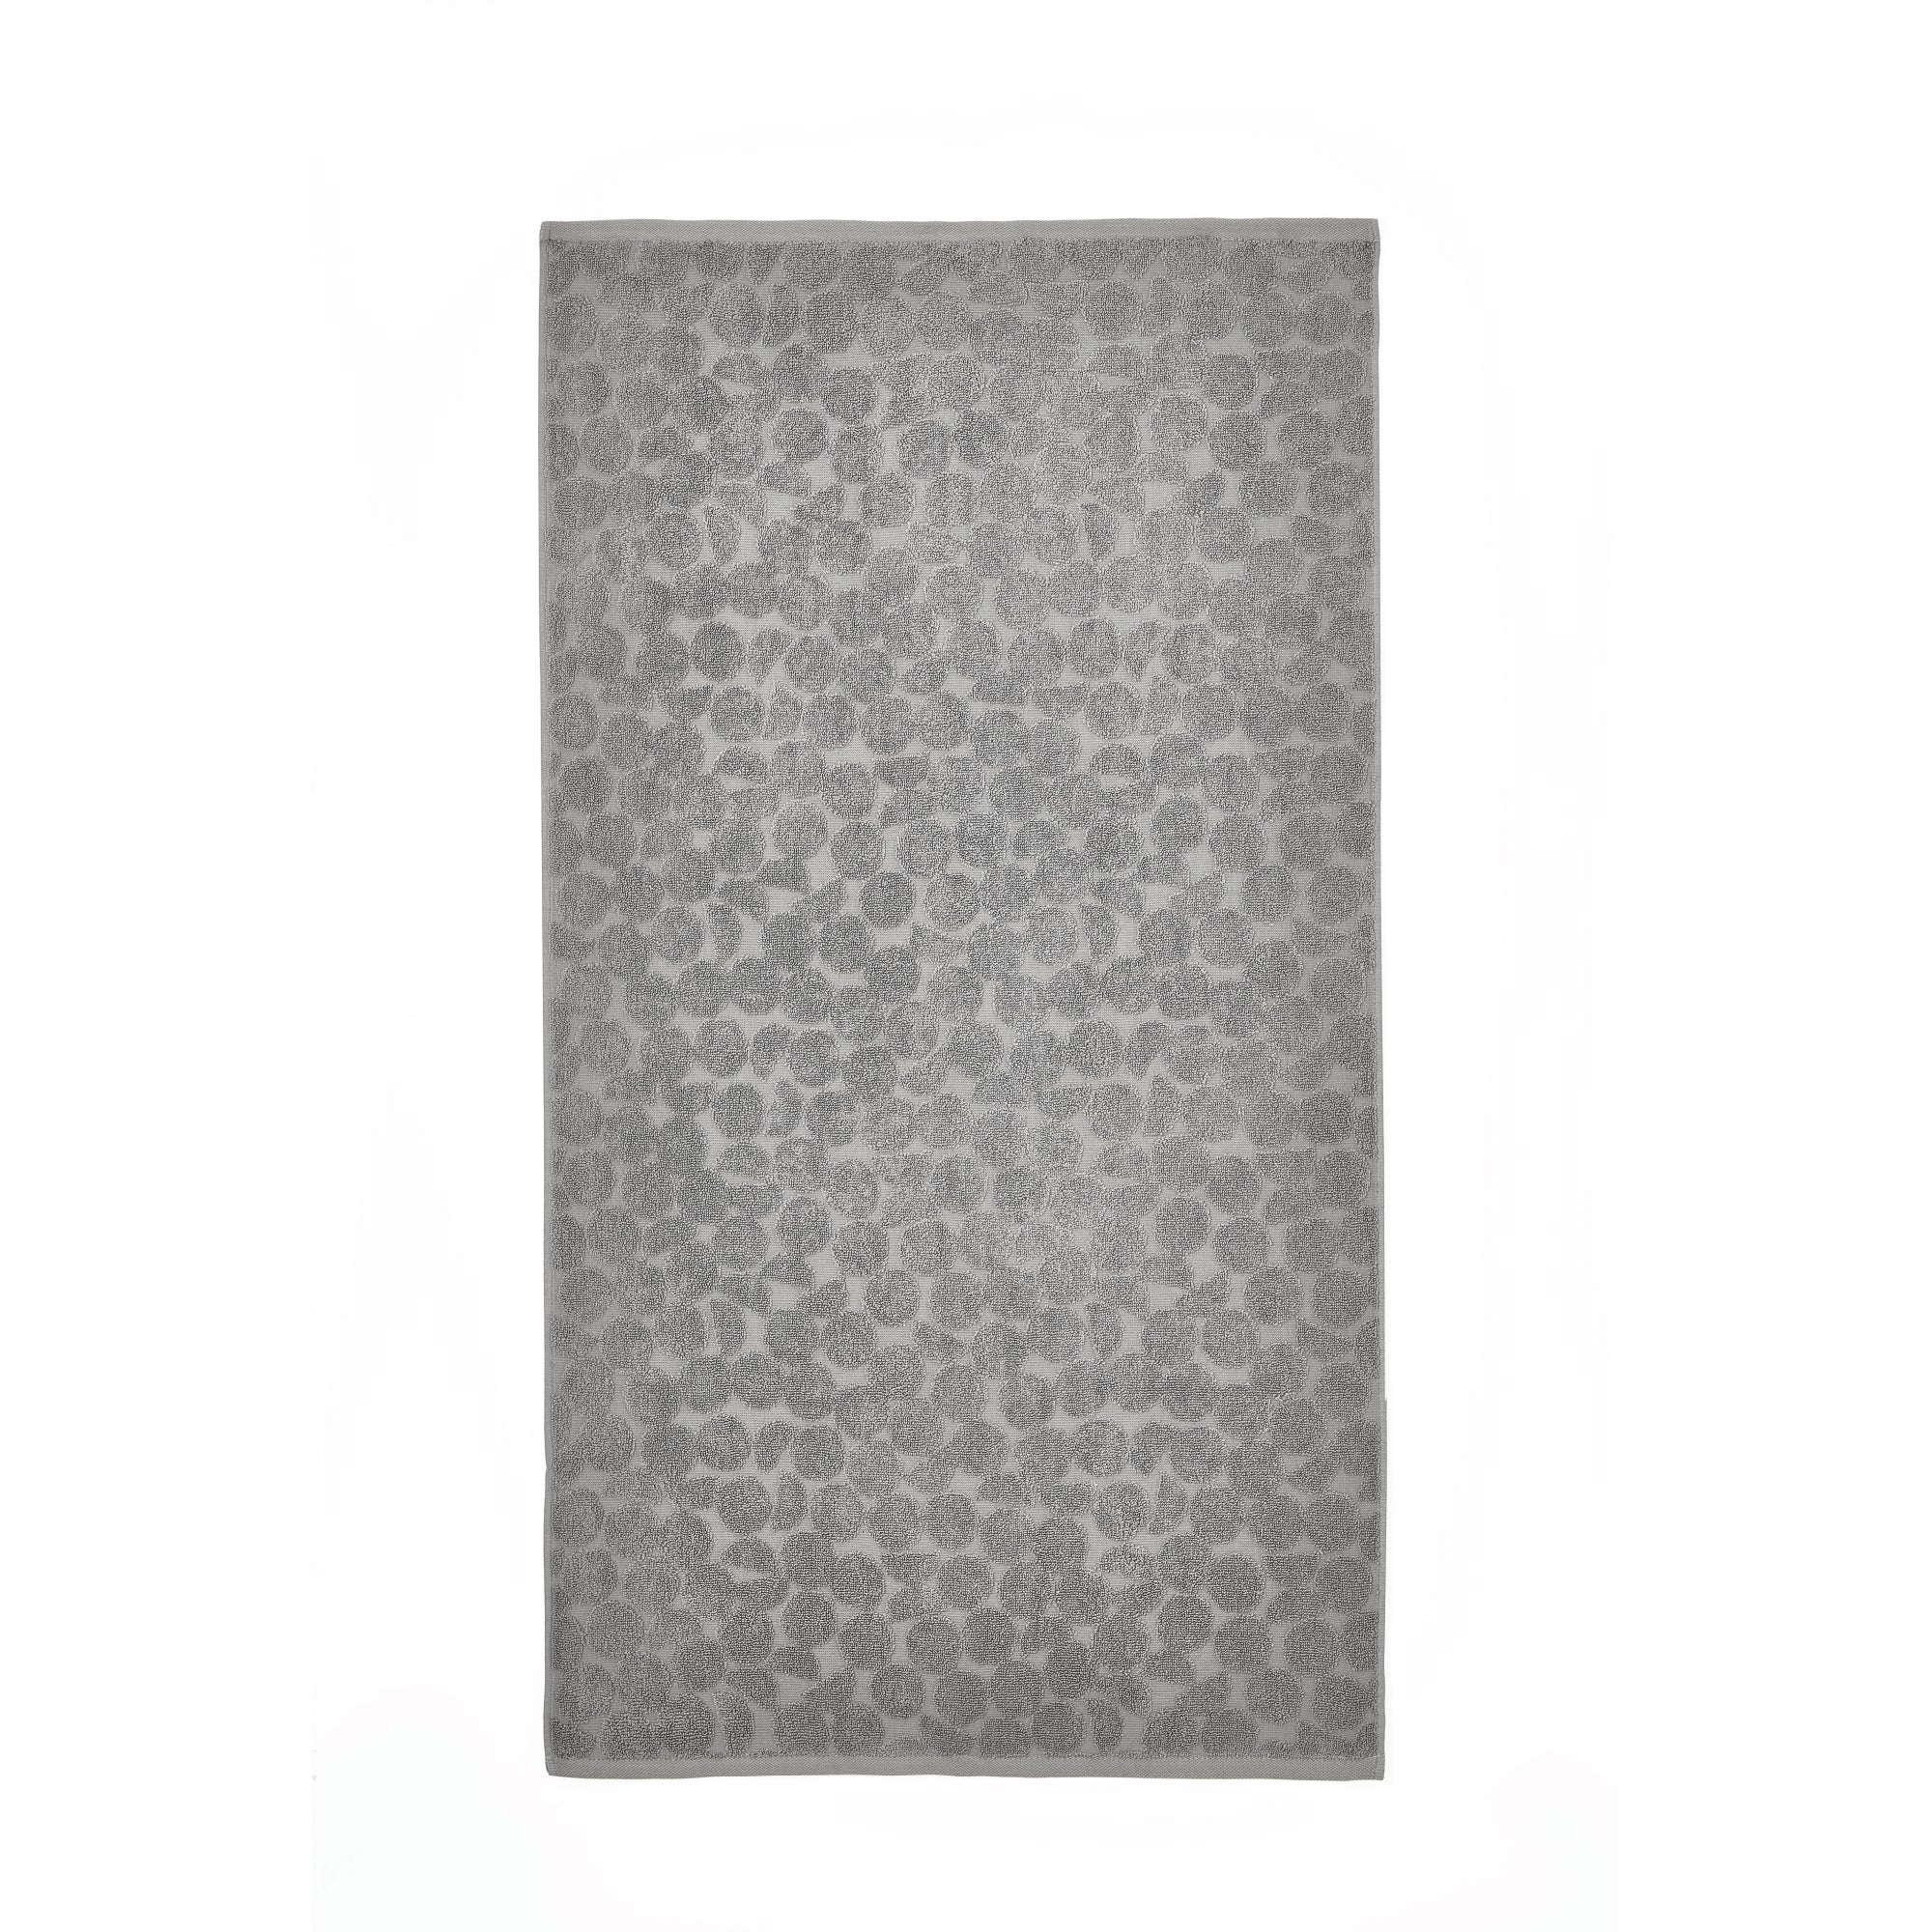 Bath Towel Ingo by Fusion in Grey